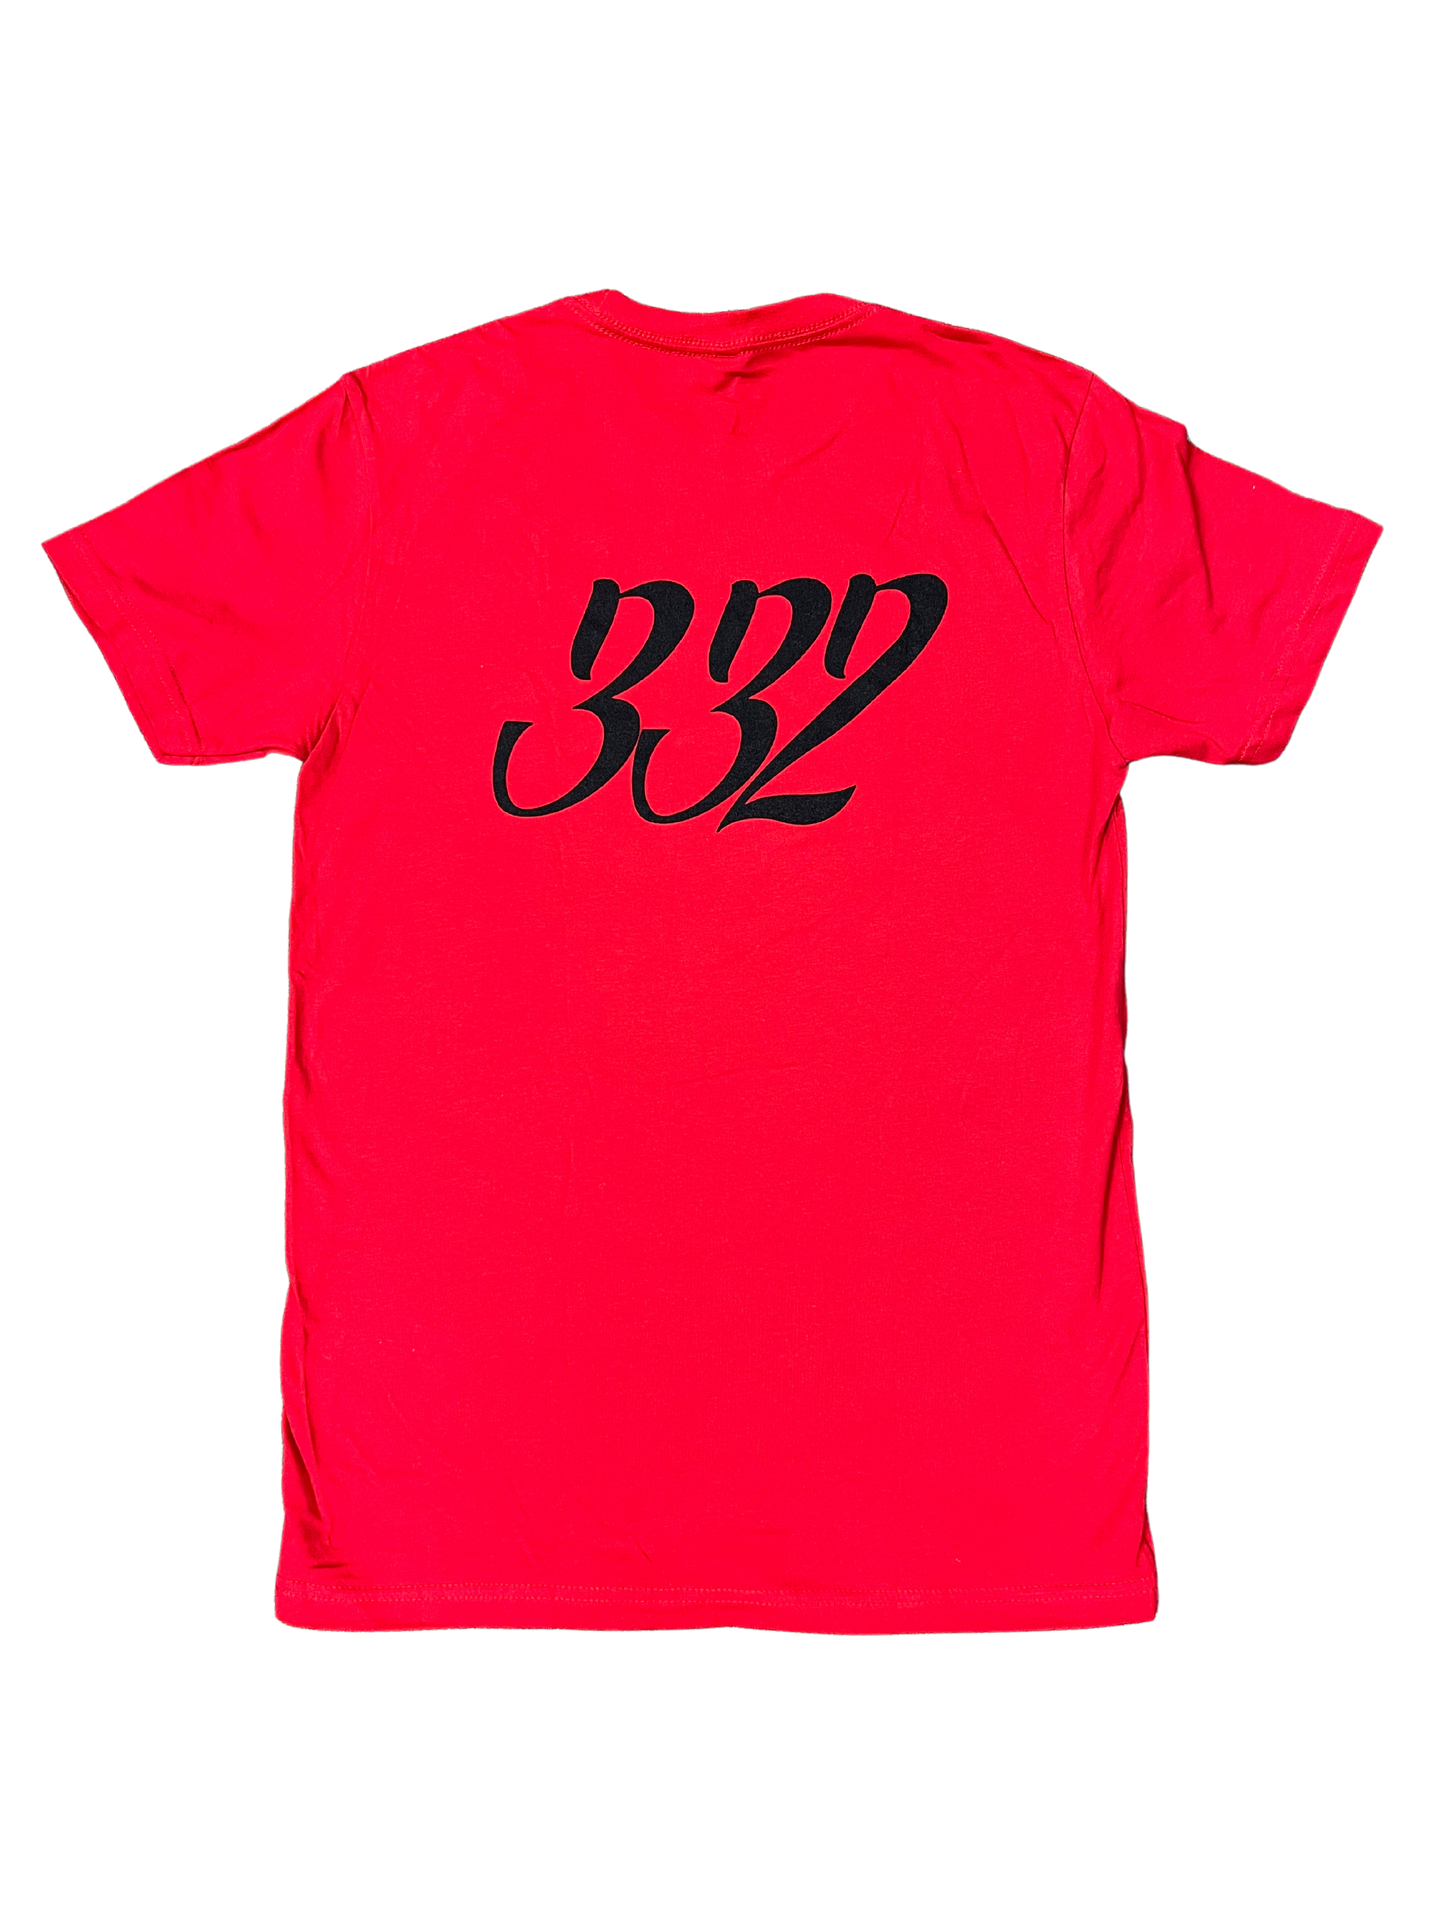 Red 332 Shirt